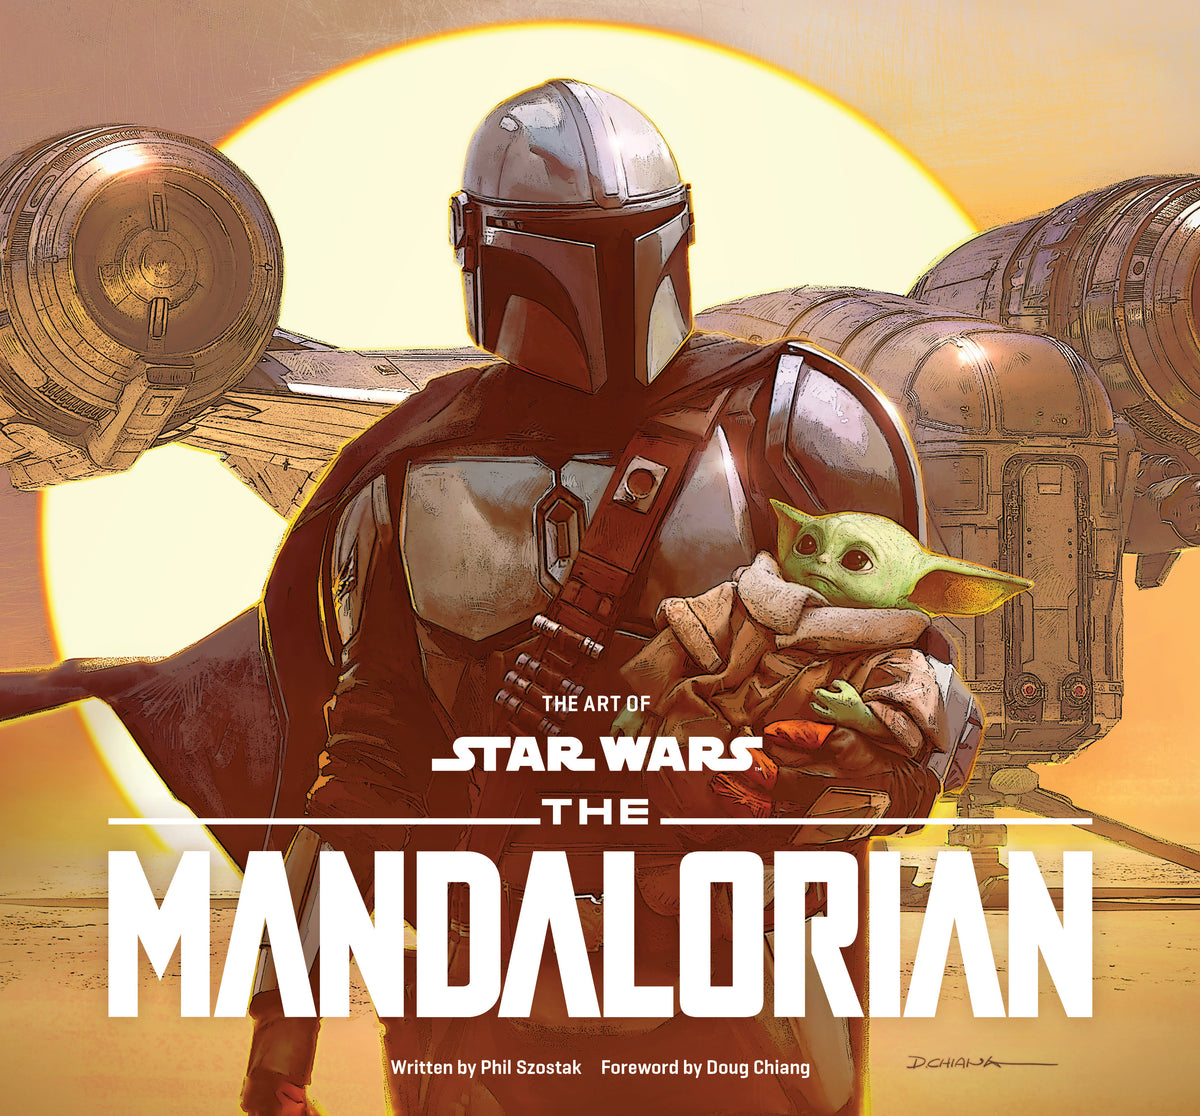 The Mandalorian and Child – Chronicle Books